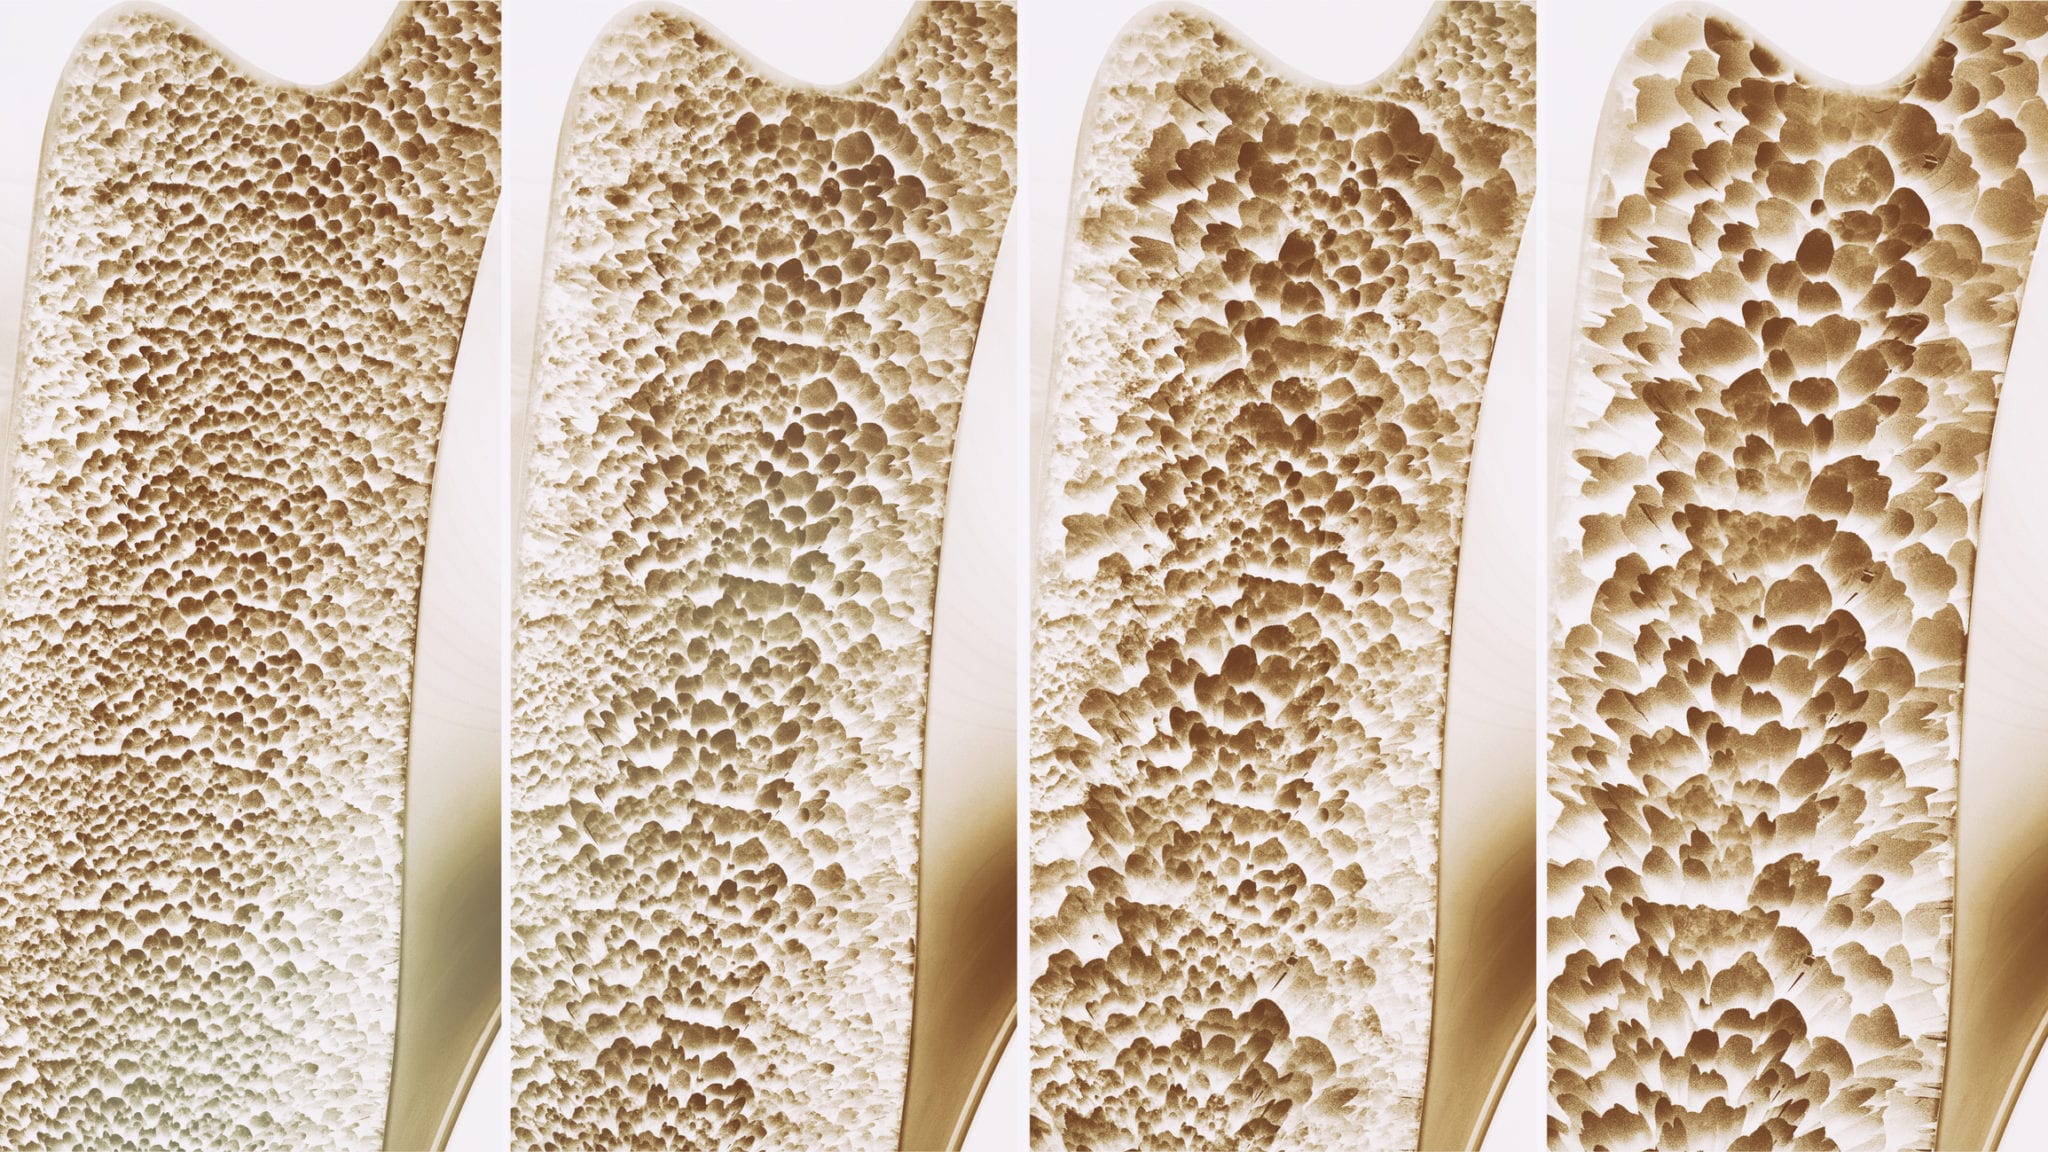 close up osteoporotic bones, risk factor for (fragility fractures)